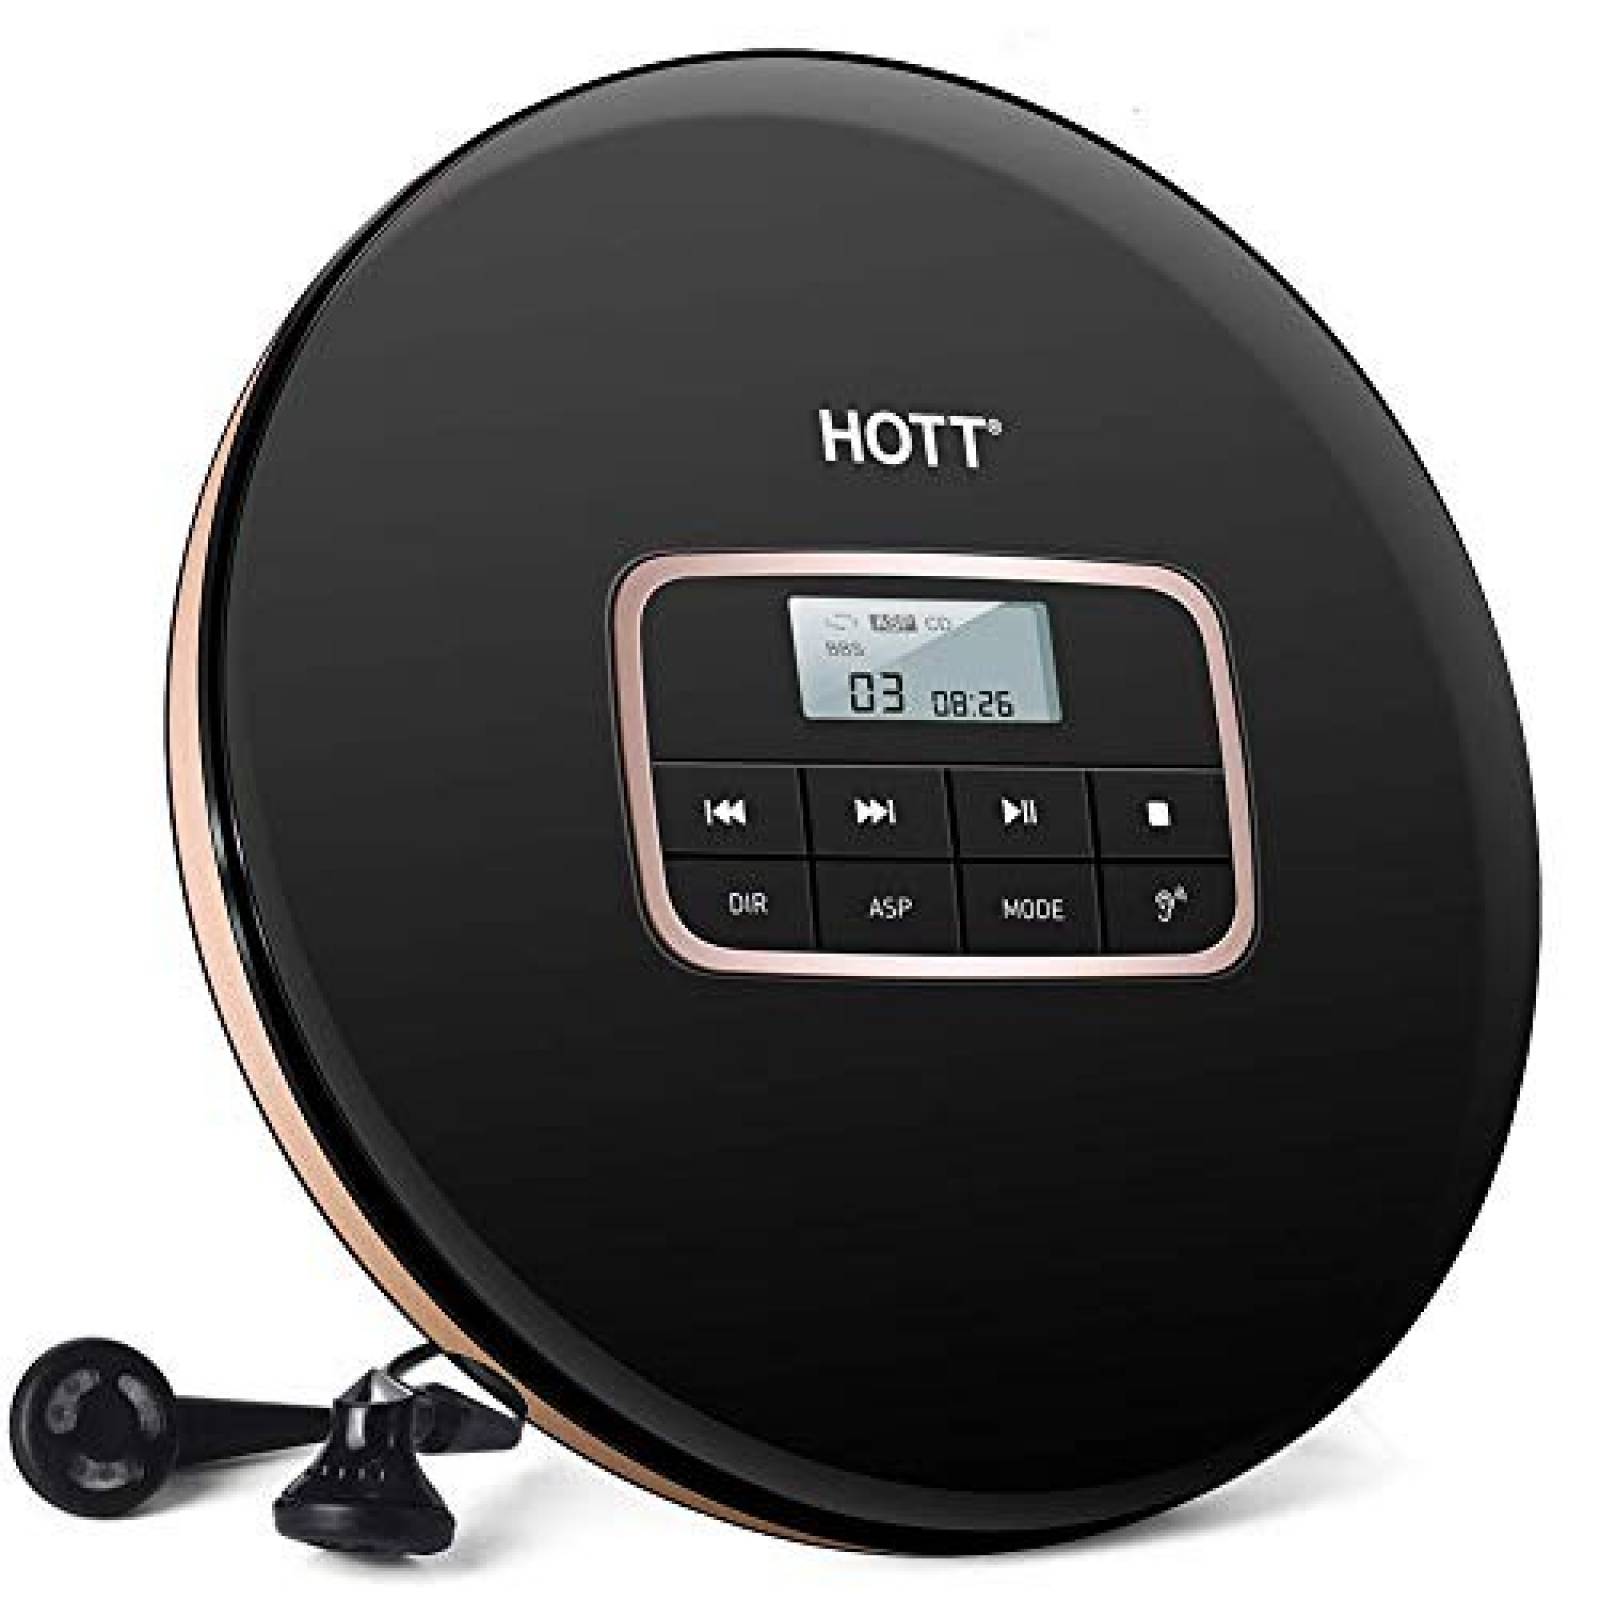 Reproductor CD portátil Maexus HOTT MP3 -negro